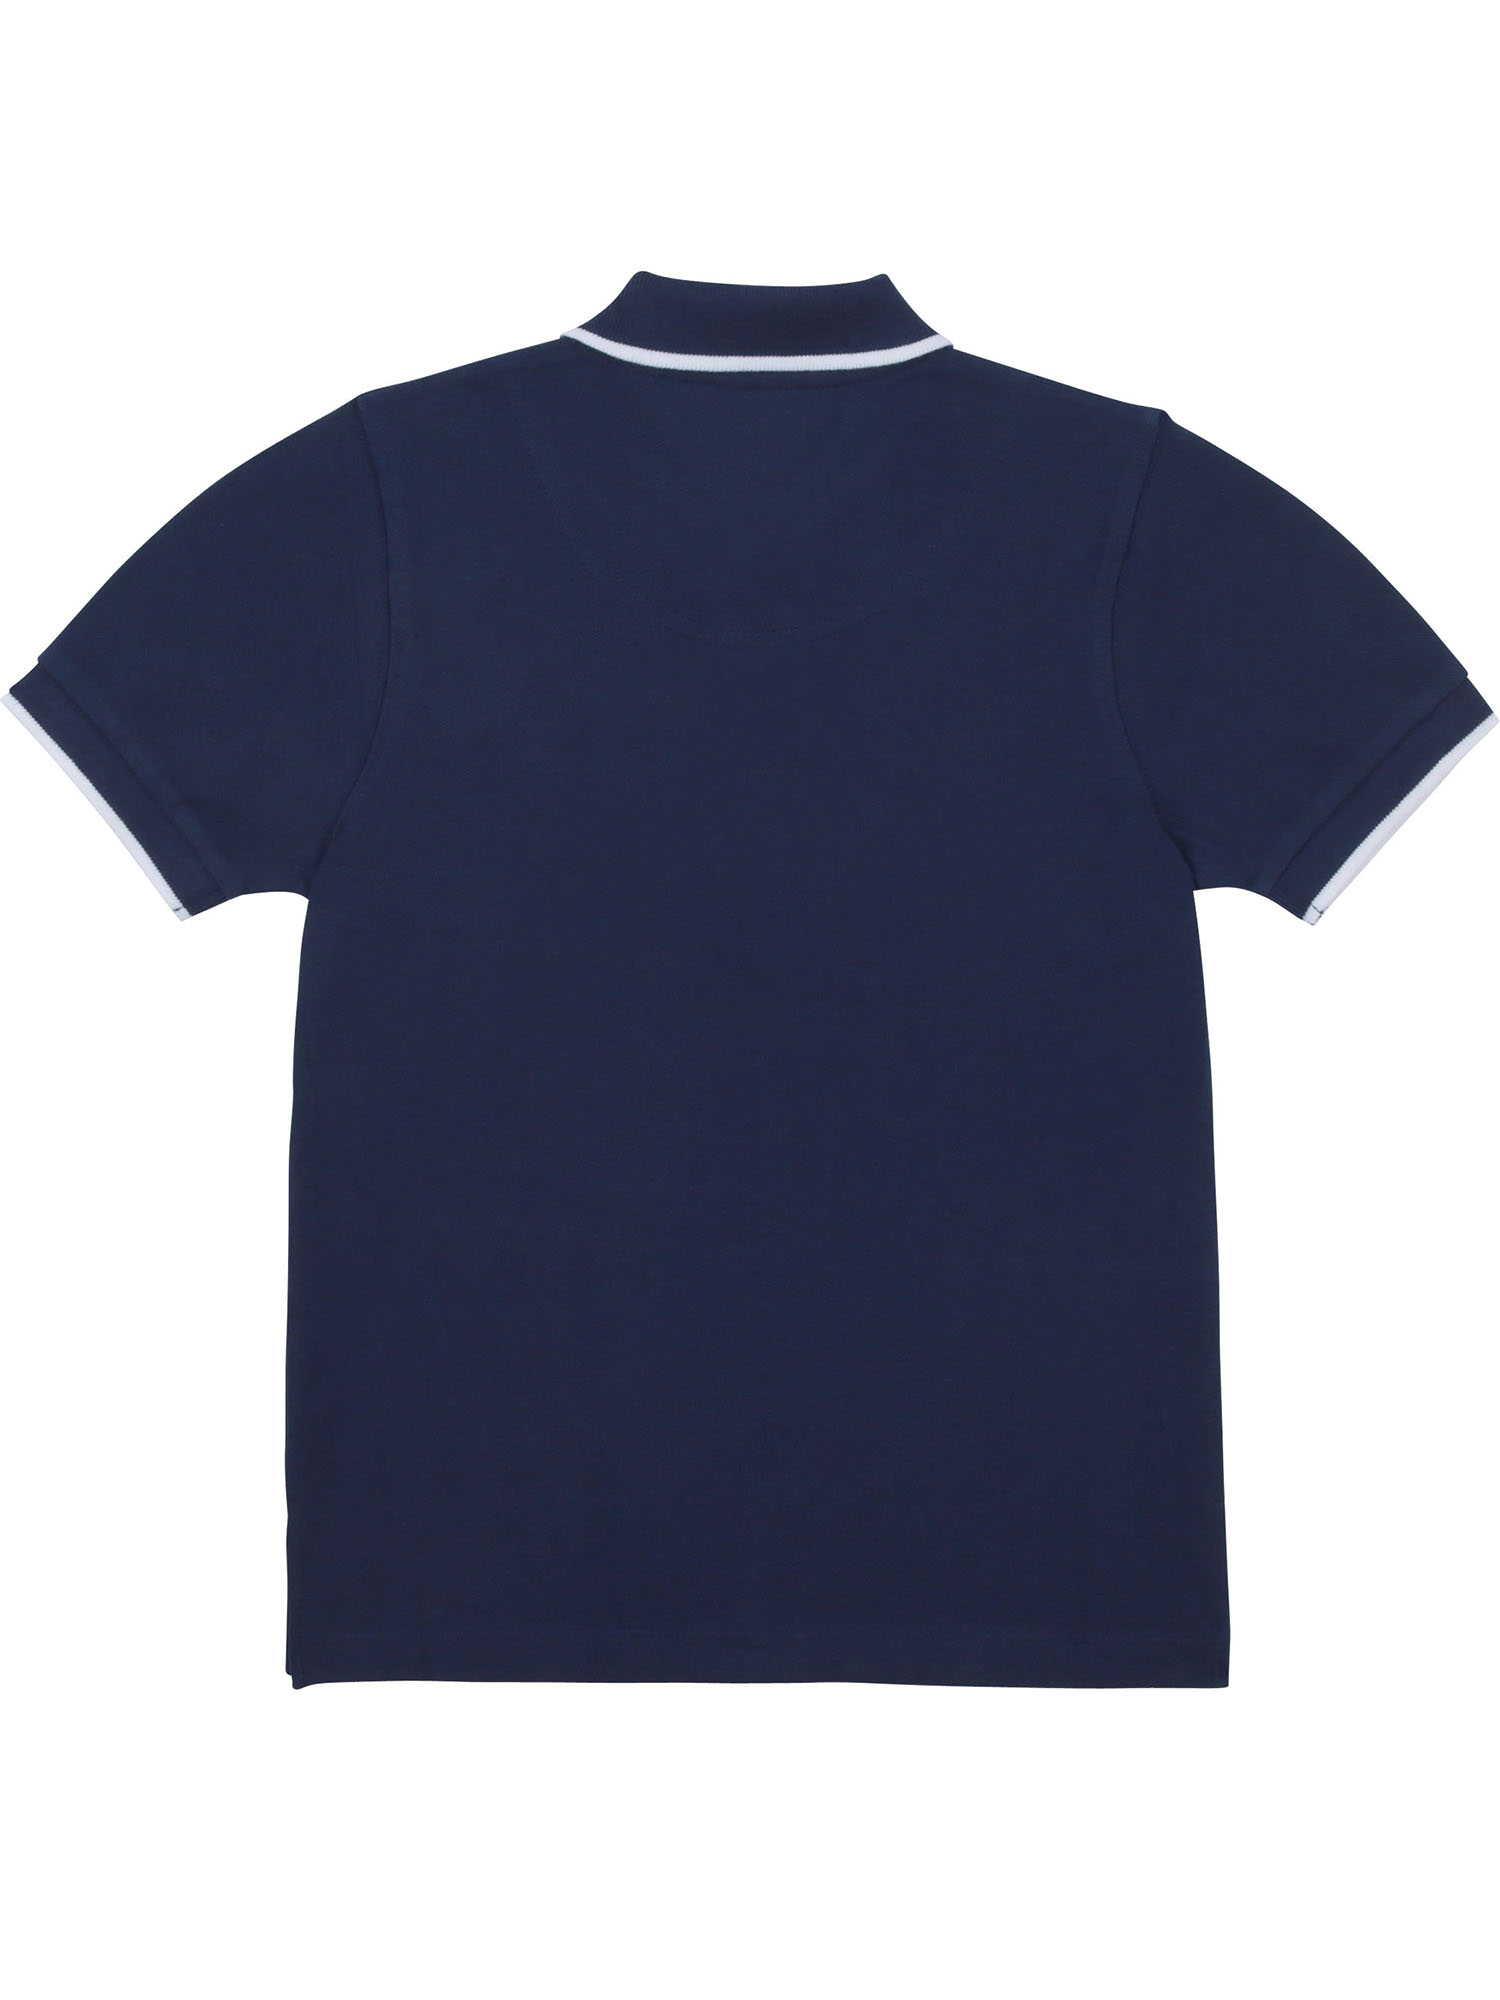 Koszulka polo chłopięca Timberland T25T21/85T Granatowy